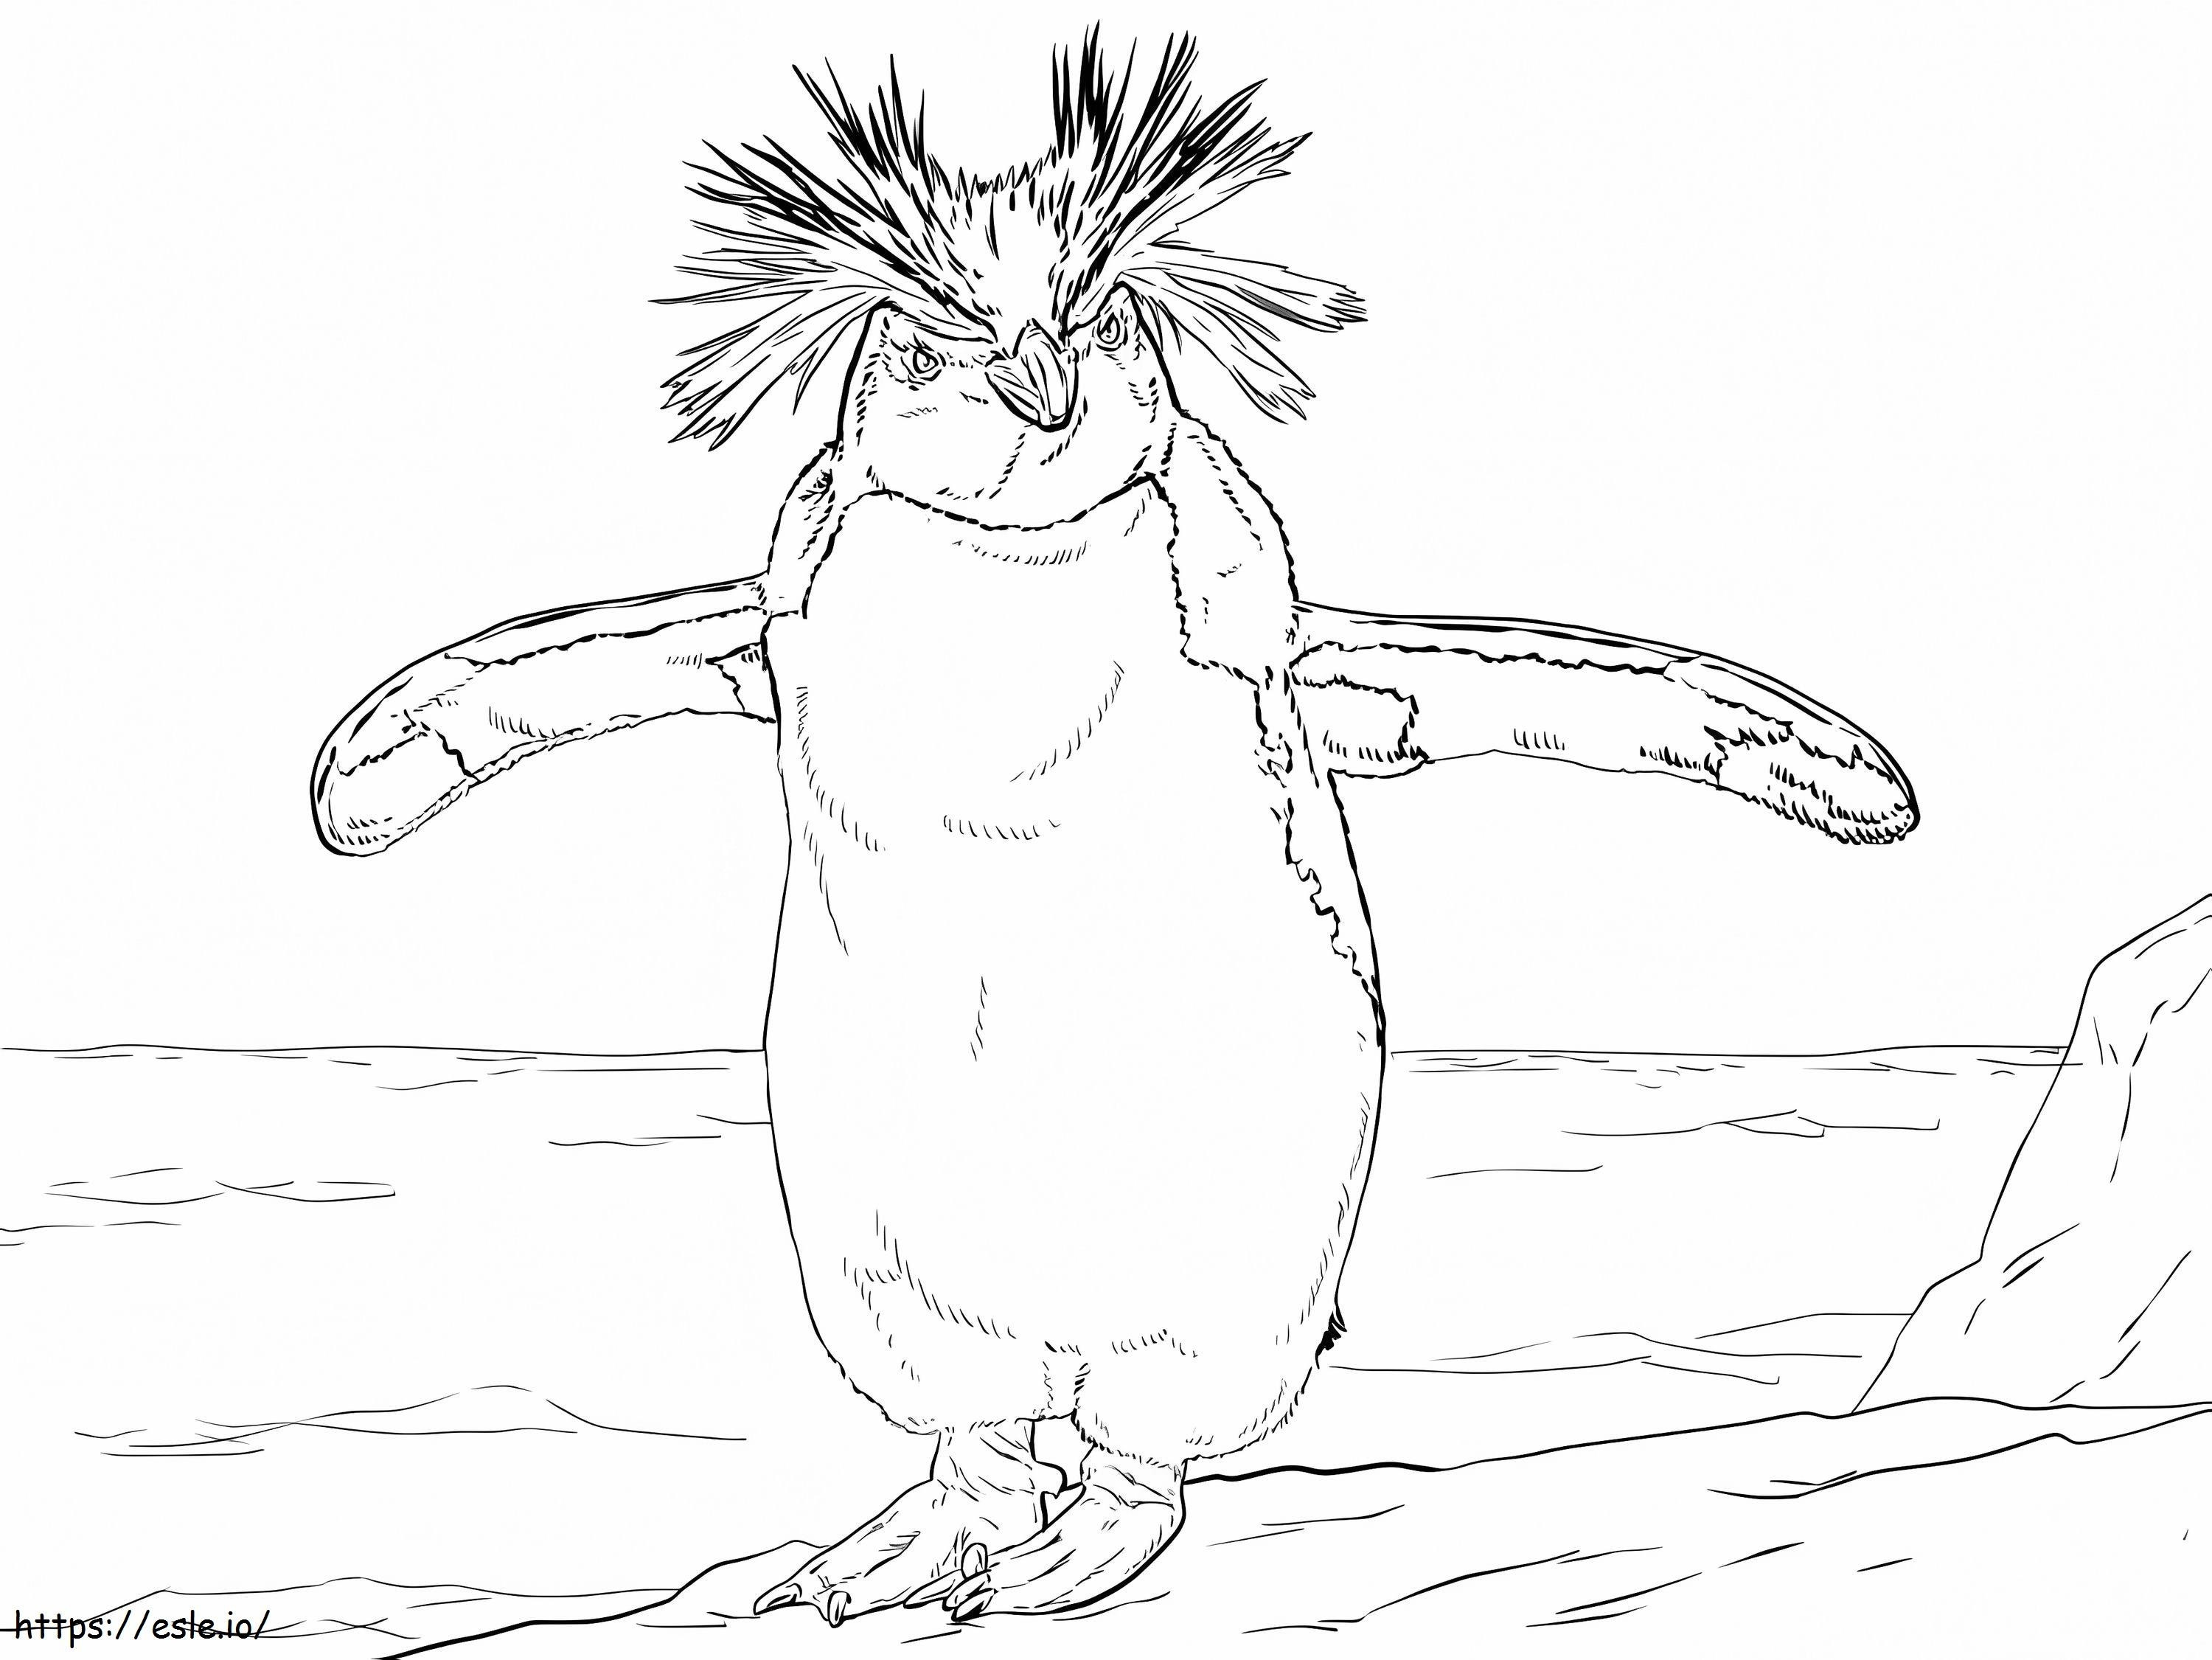 Northern Rockhopper Penguin coloring page